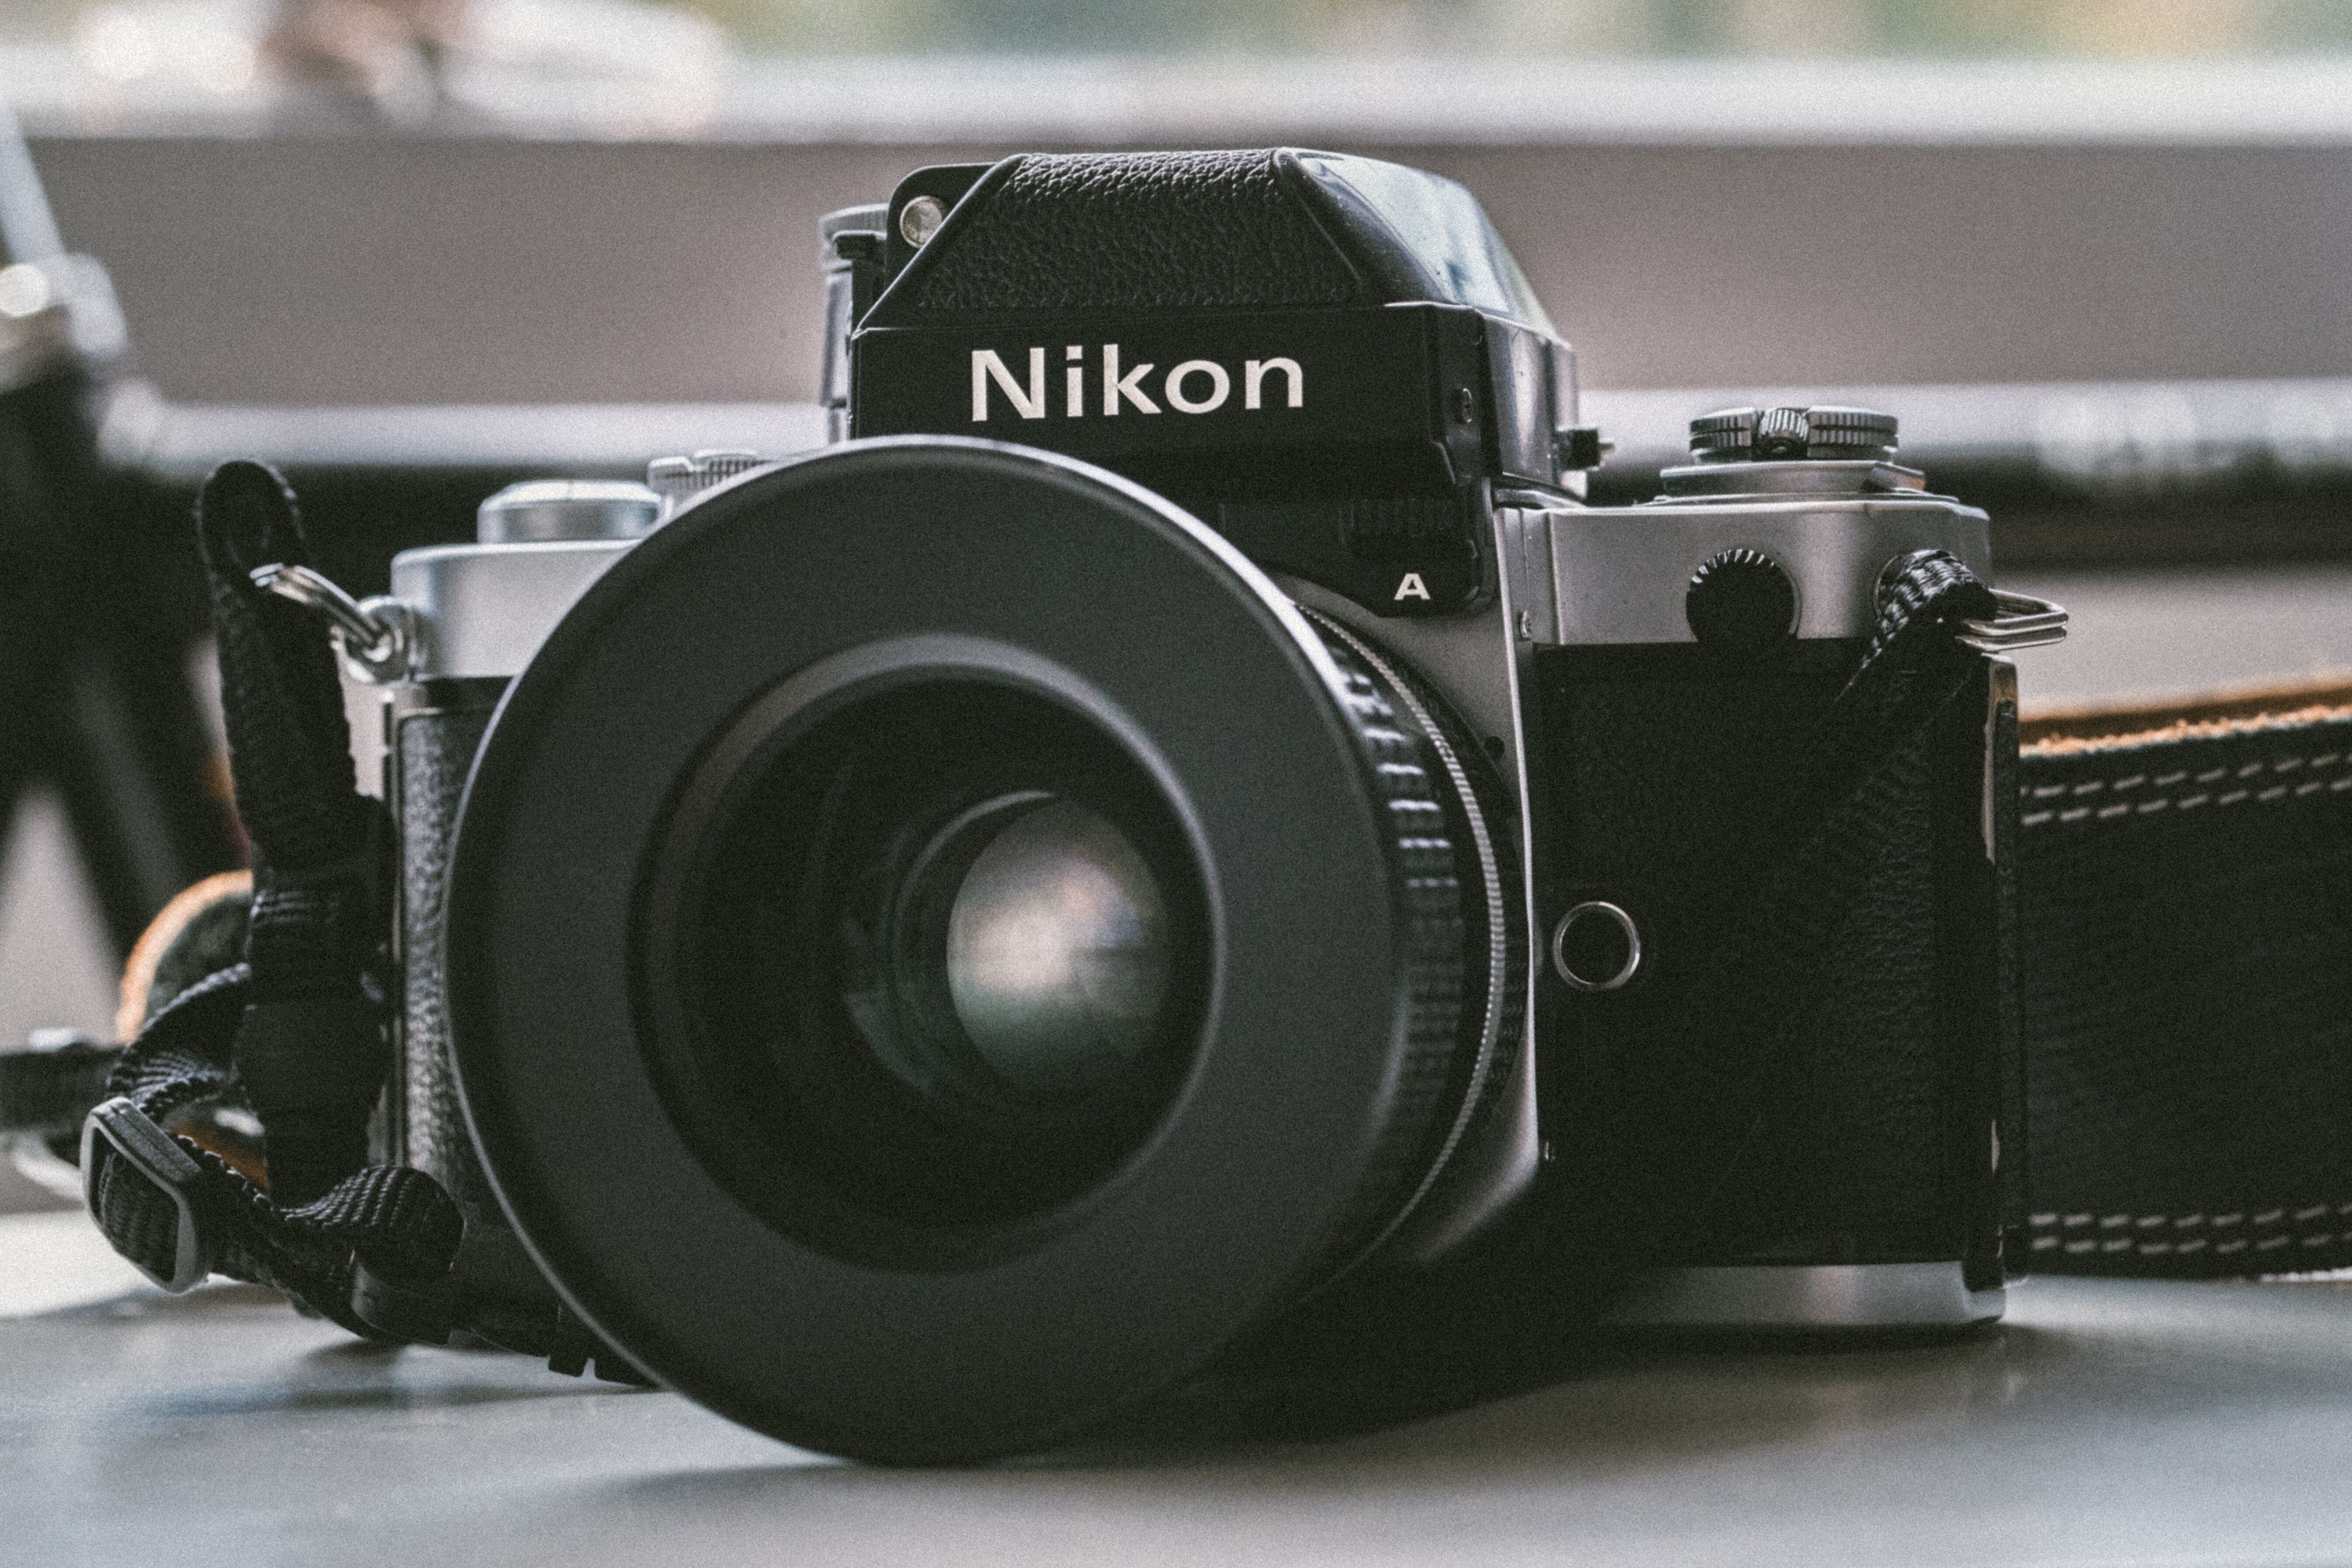 Black Nikon camera placed on a table